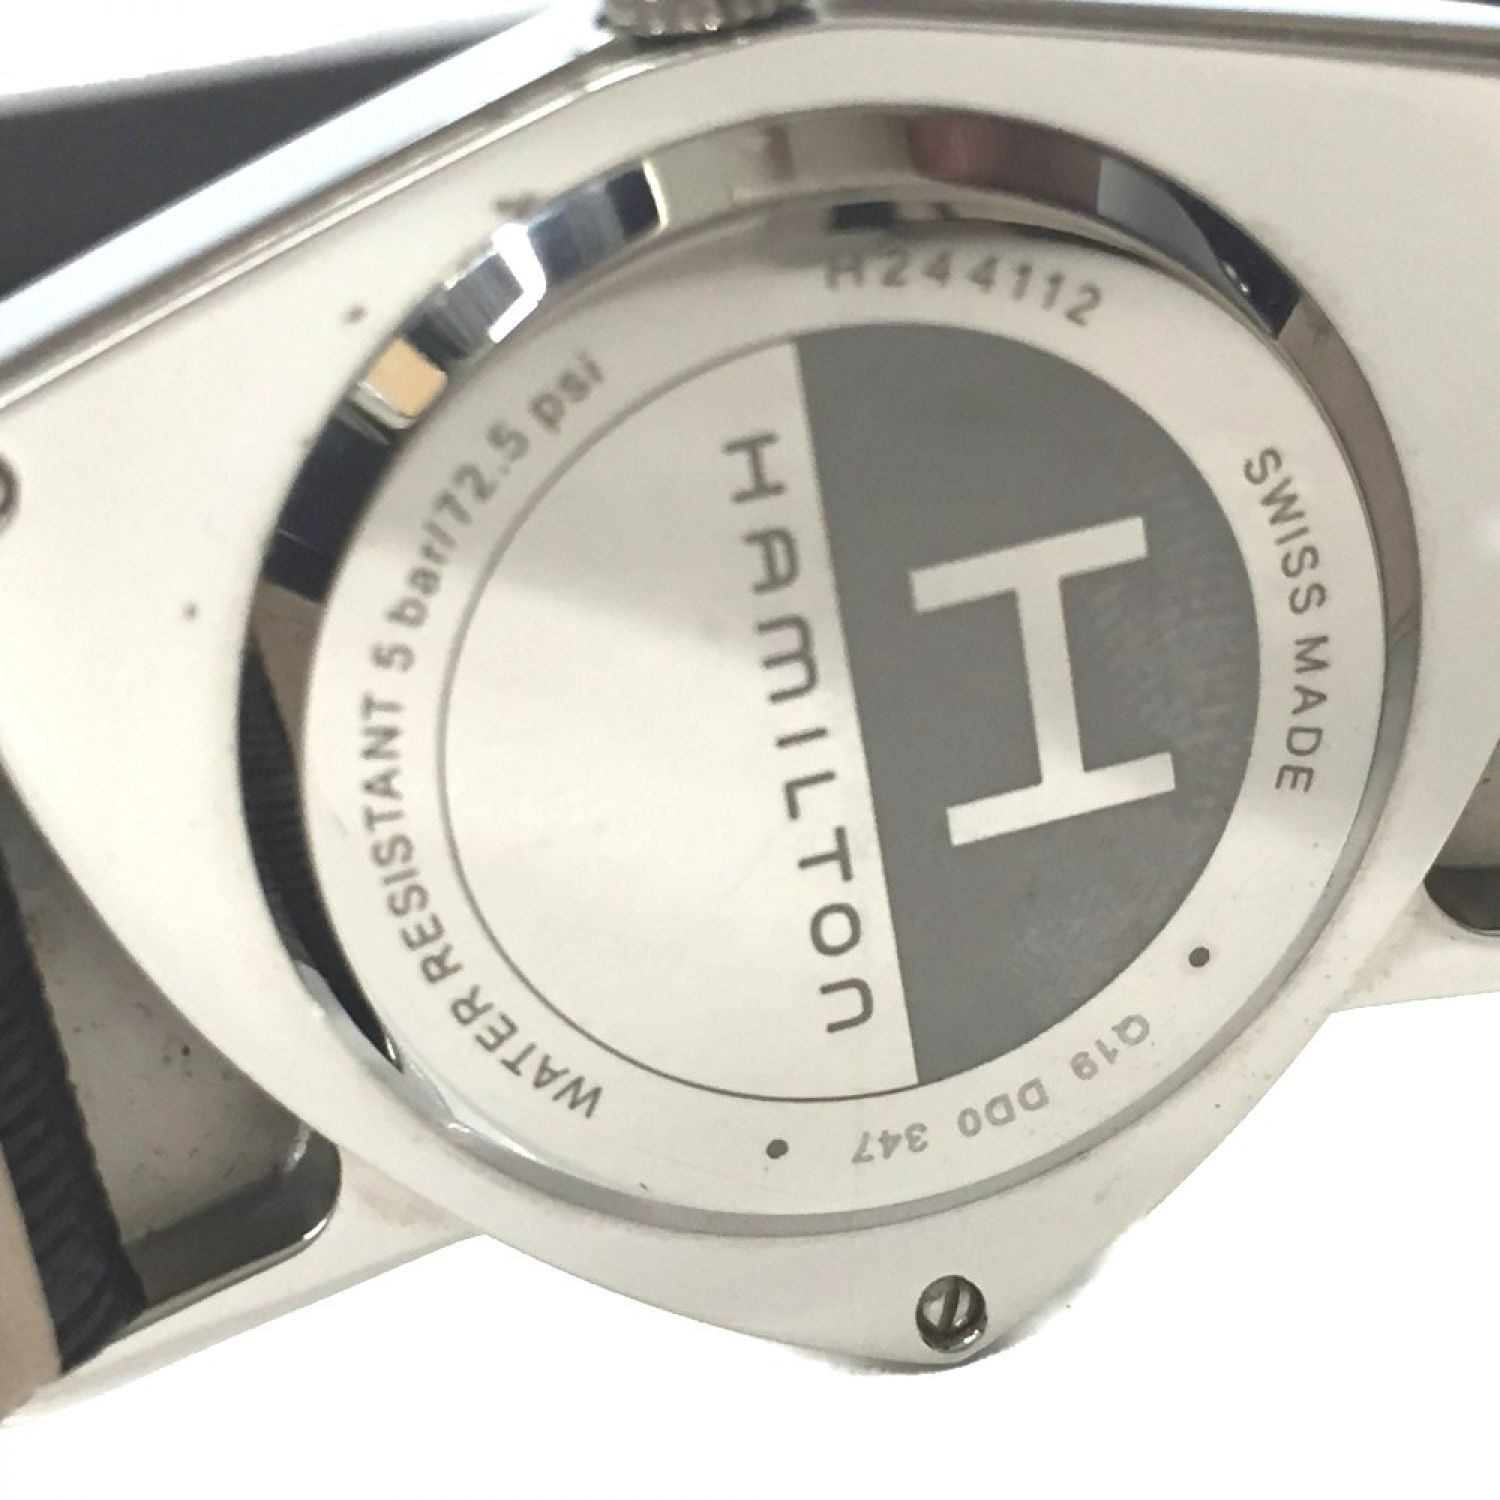 △△HAMILTON ハミルトン ベンチュラ H244112 腕時計